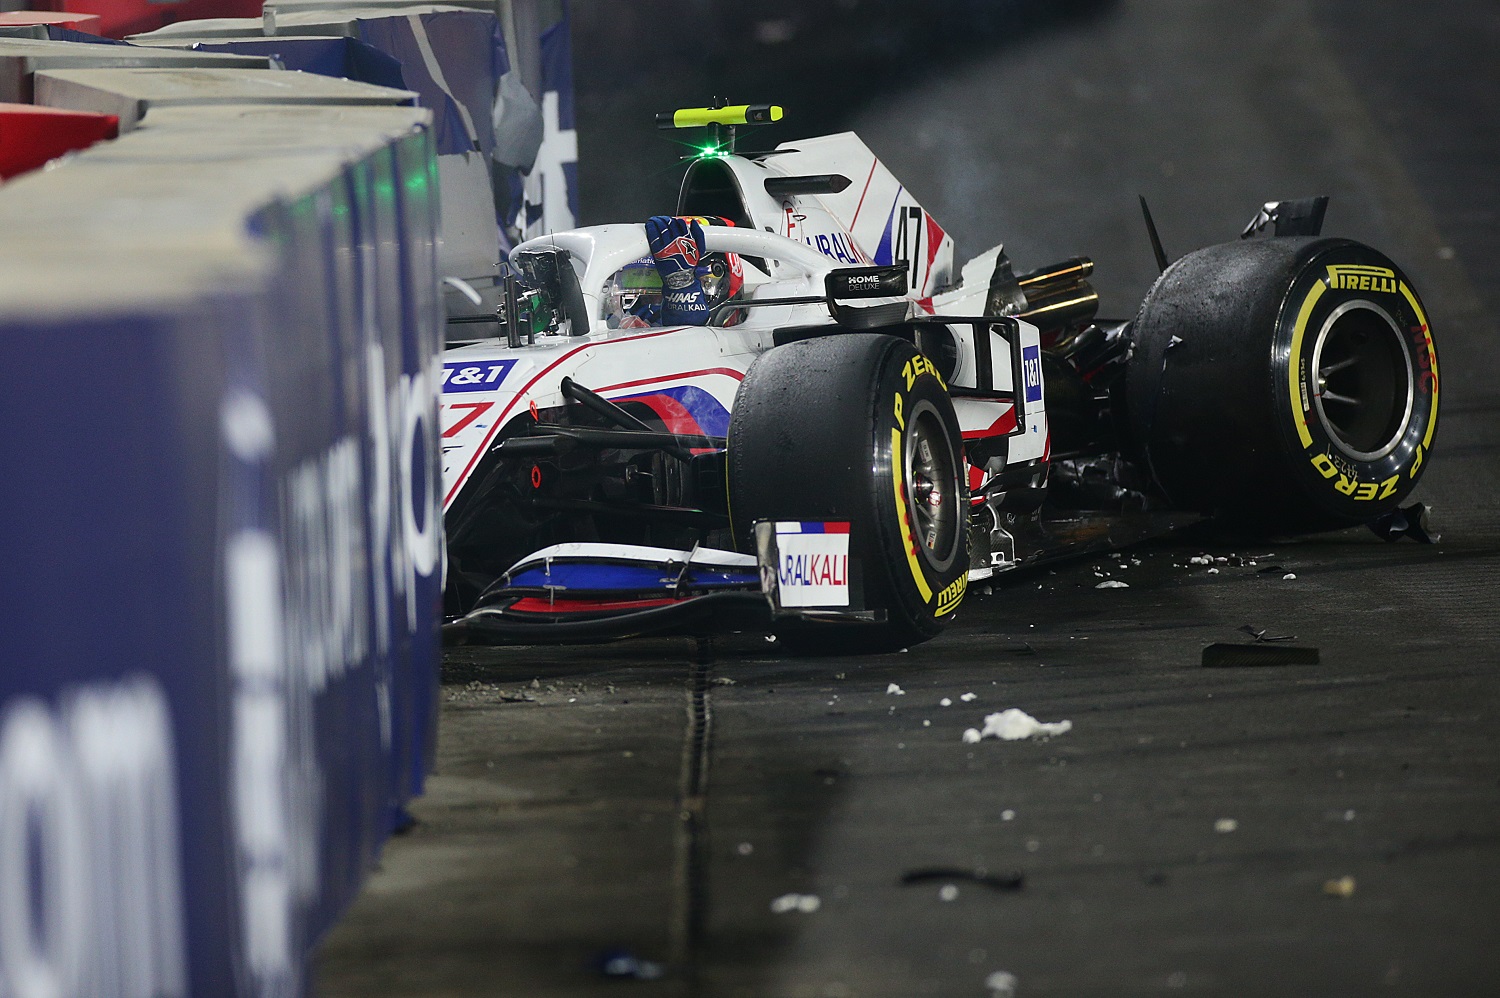 Mick Schumacher of Germany crashes during the Formula 1 Grand Prix of Saudi Arabia.